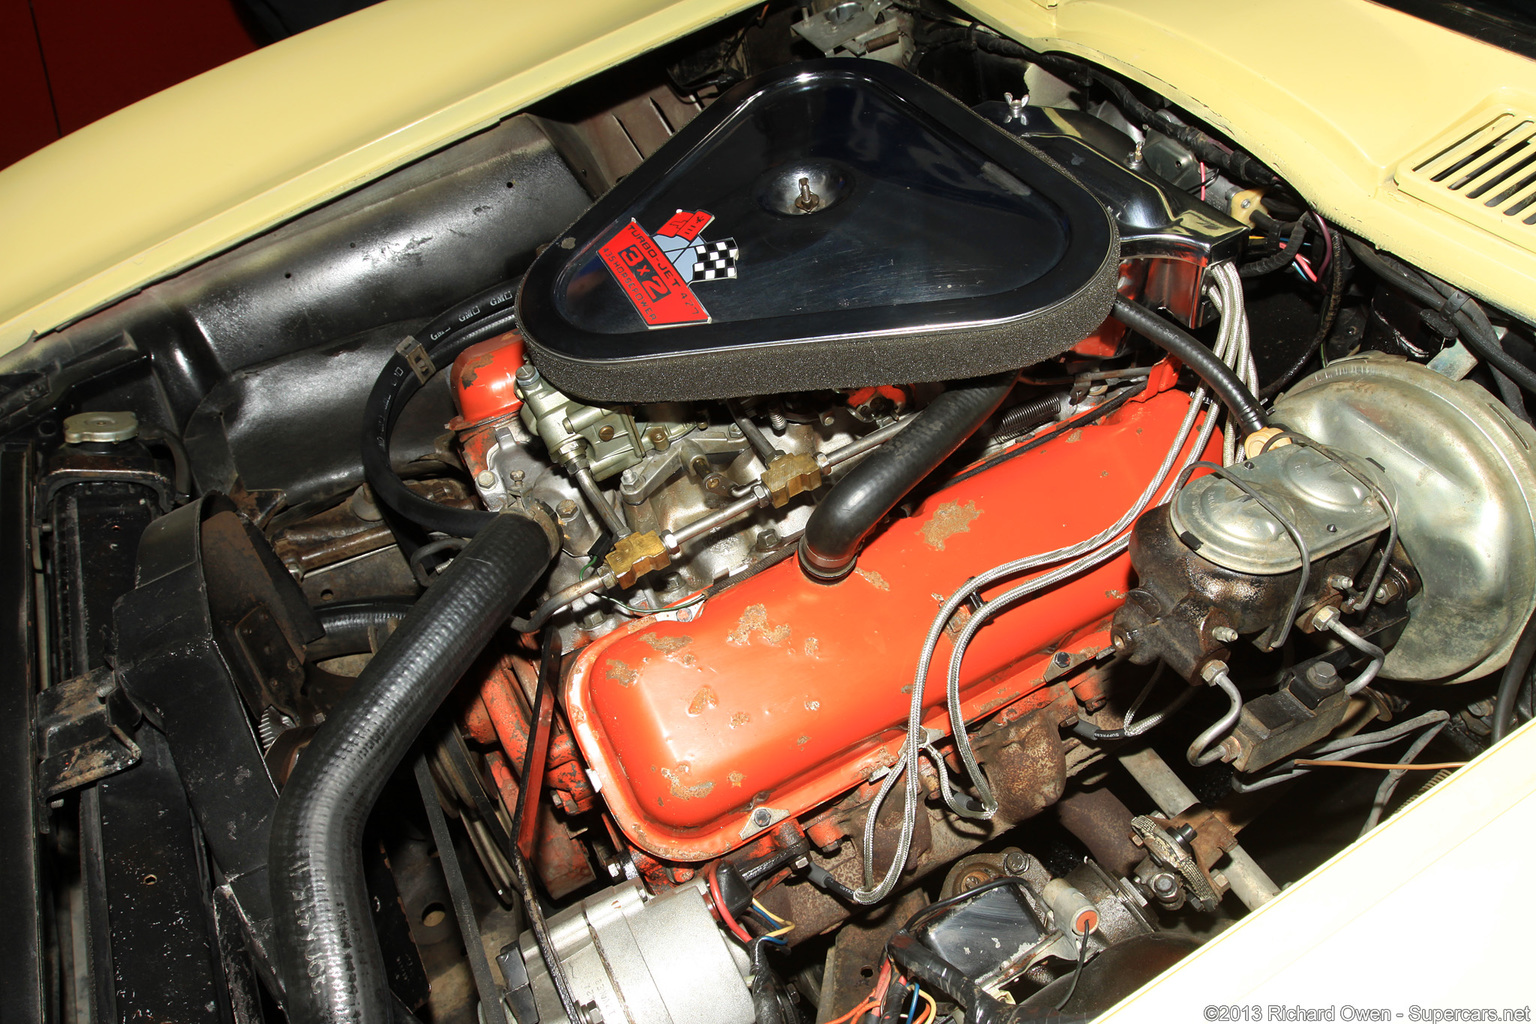 1967 Chevrolet Corvette Sting Ray L71 427/435 HP